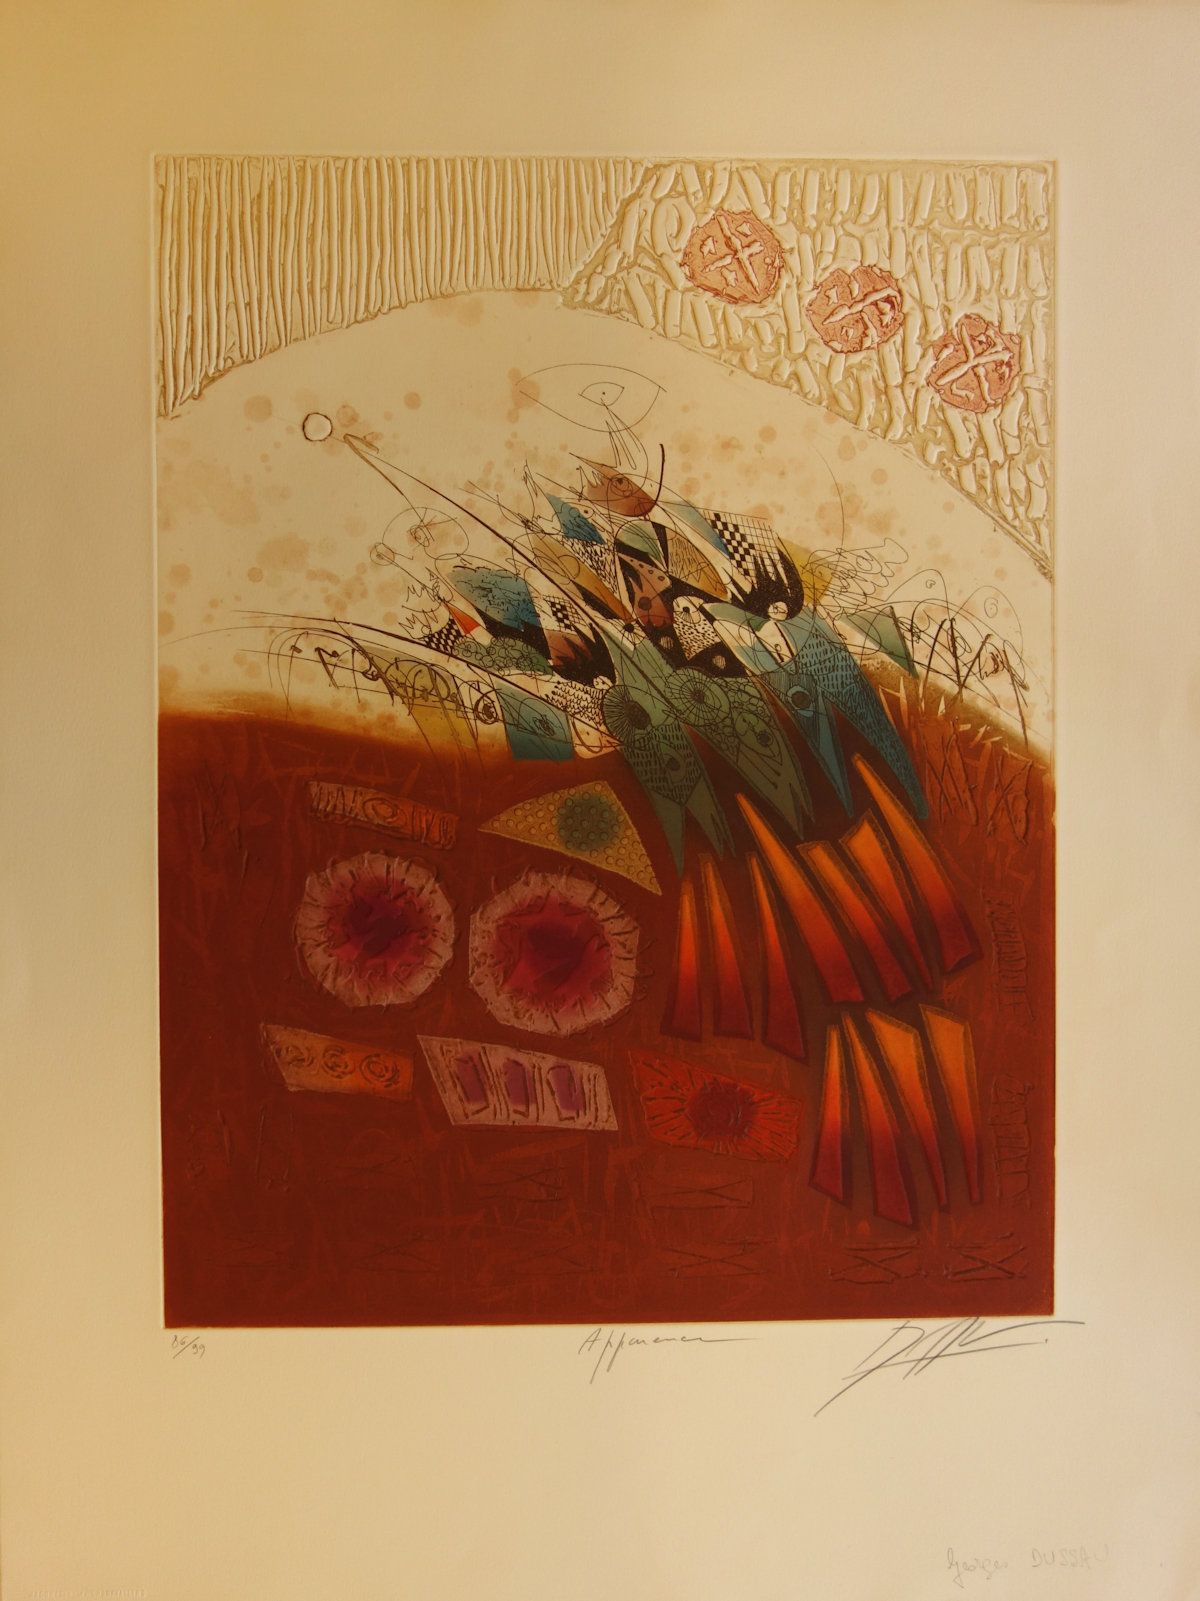 Georges Dussau Georges DUSSAU

Appearances

Original etching

Signed in pencil

&hellip;